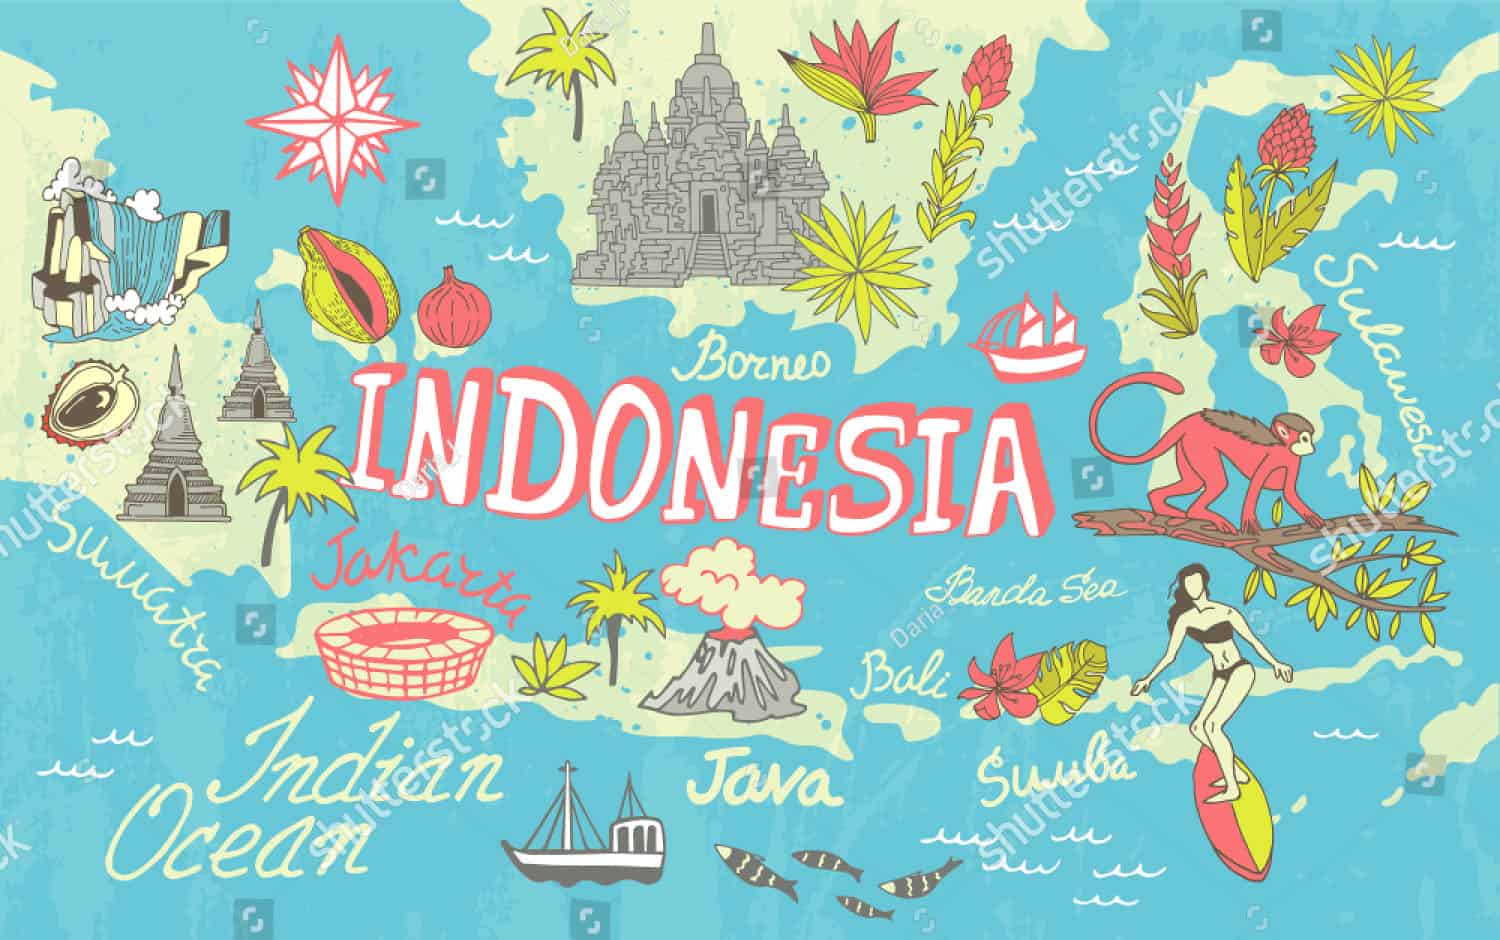 Descriptive image of a beautiful tourist area in Indonesia